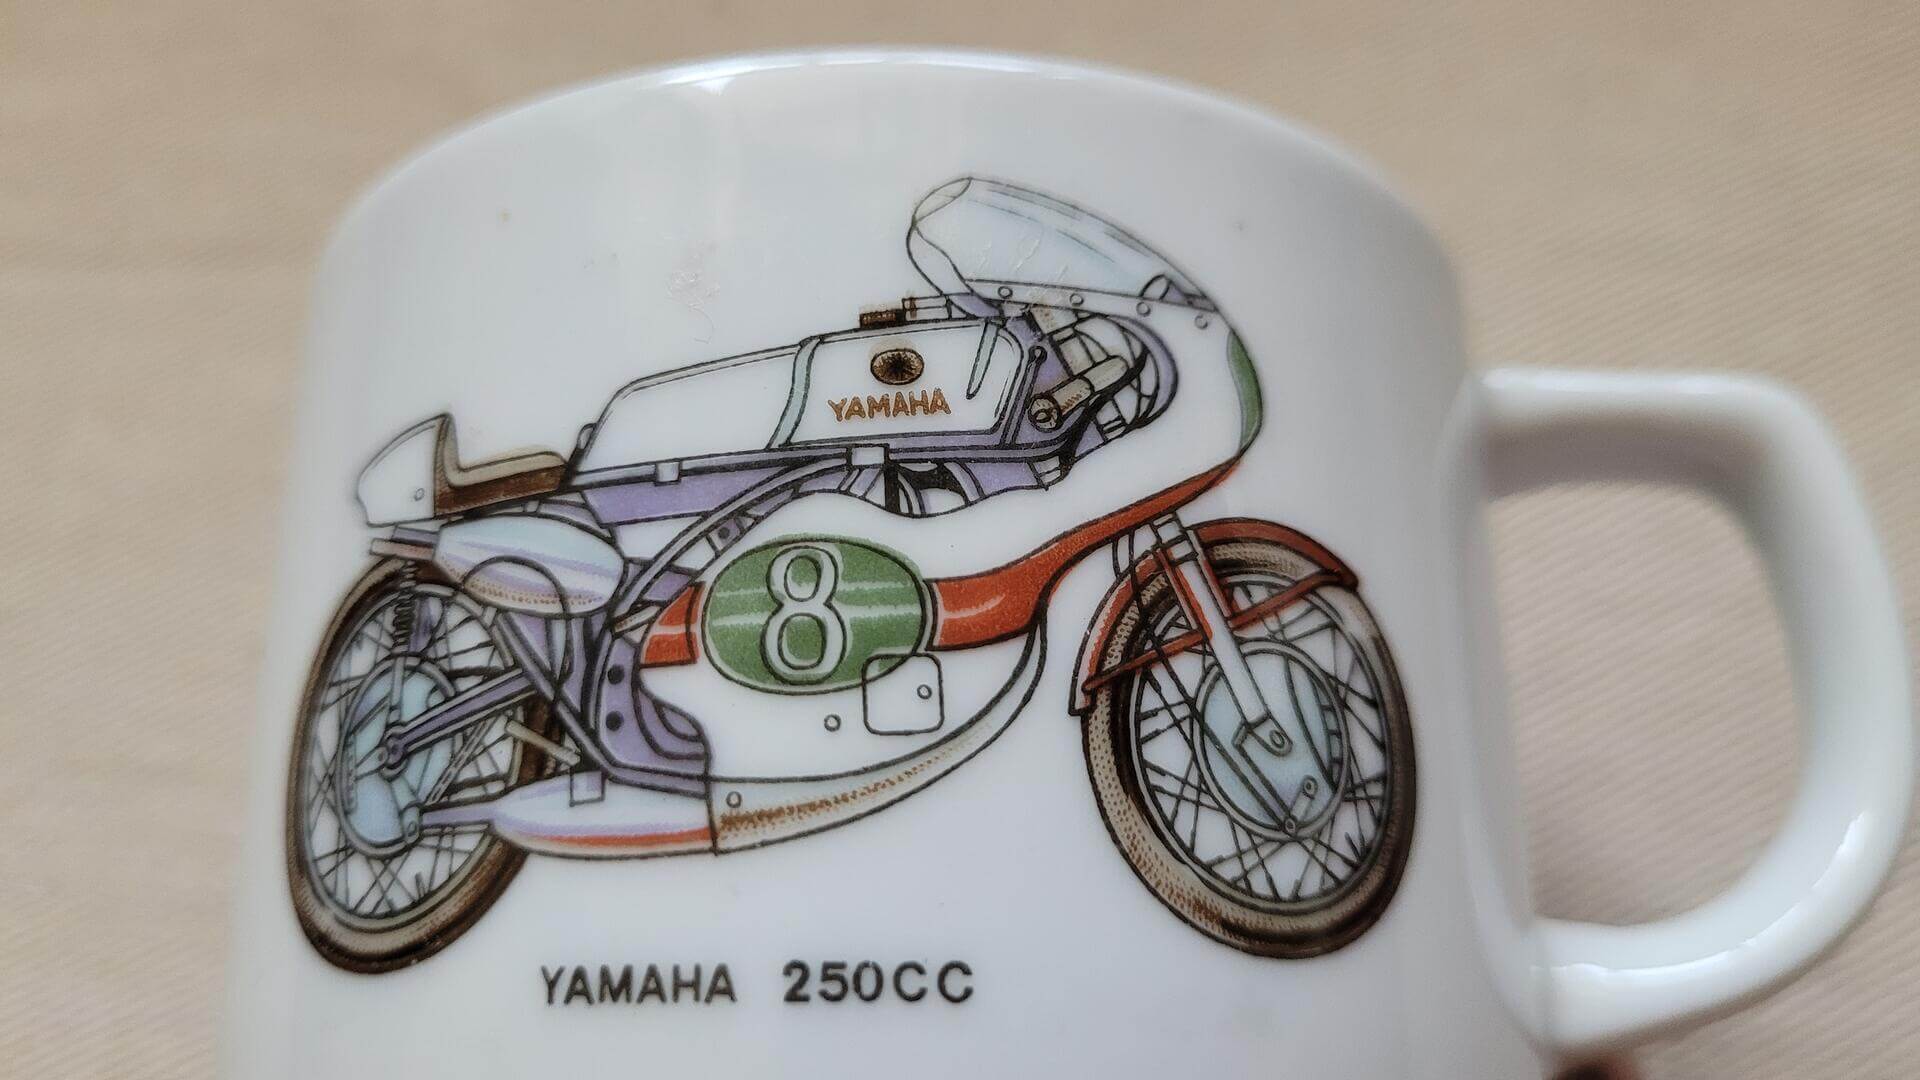 Rare Retro 1970s Yamaha Motorcycle World Championship 125cc 250cc Dealer Promotional Mug - Vintage made in Japan retro motorcycle and transportation memorabilia